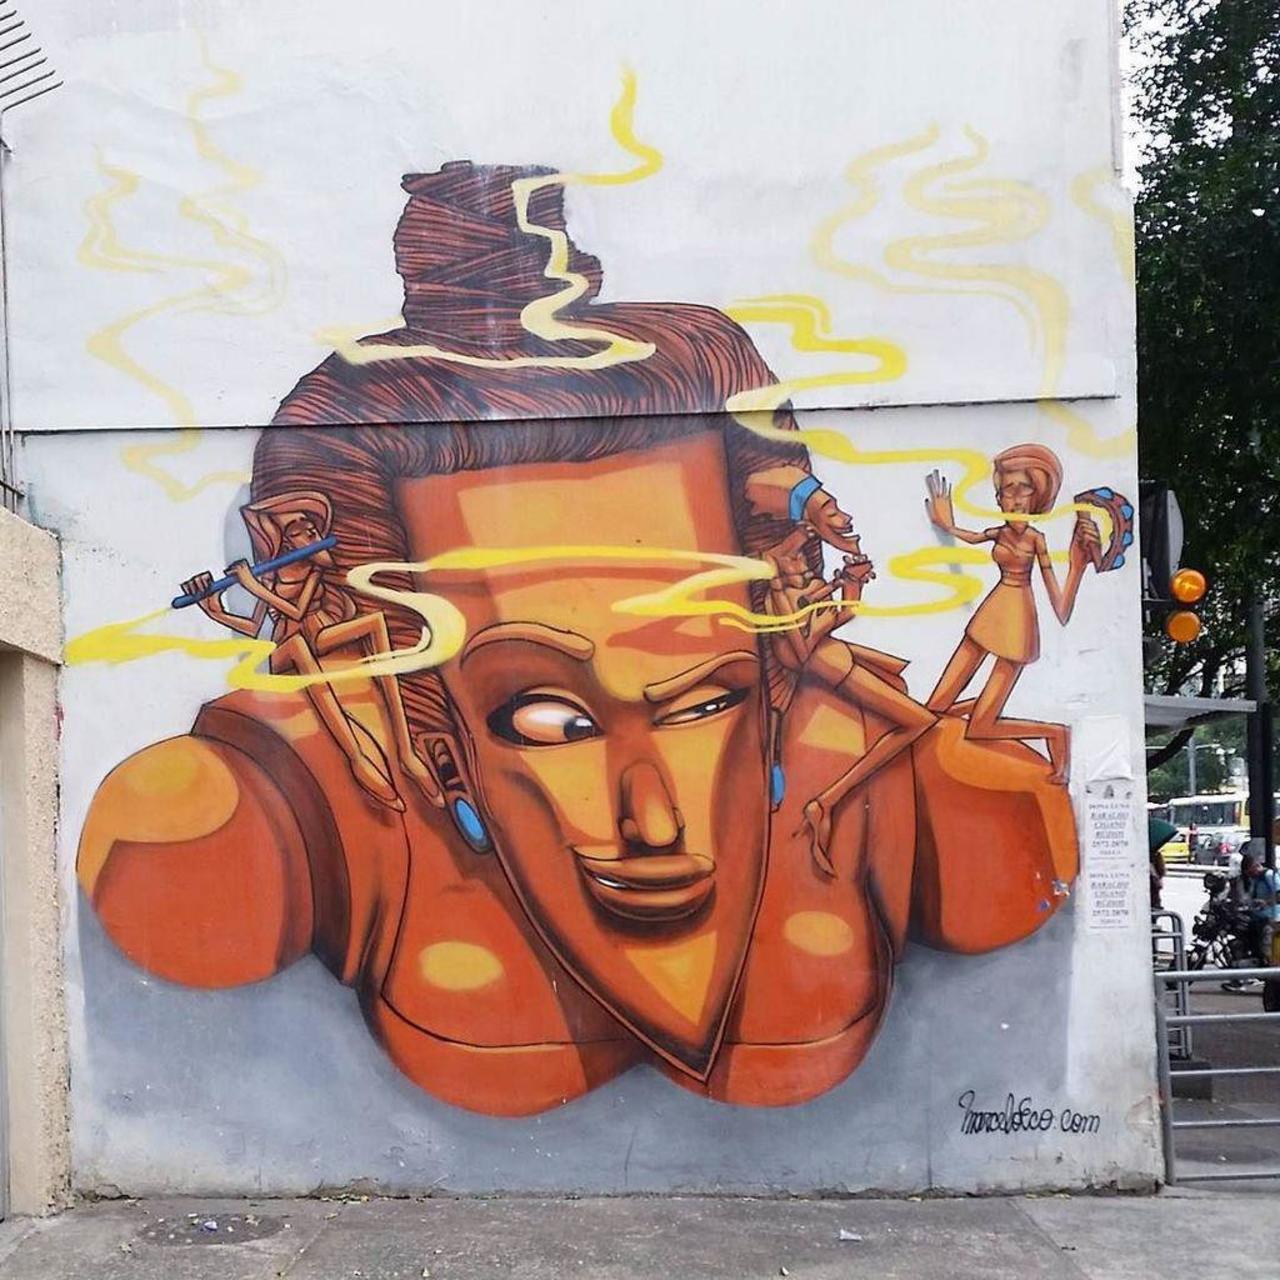 RT @StArtEverywhere: Marcelo Eco na Tijuca. Foda!!! #marceloeco #streetart #streetartrio #artederua #graffiti #grafitti #grafite #tijuca… http://t.co/z61IaAF9yo